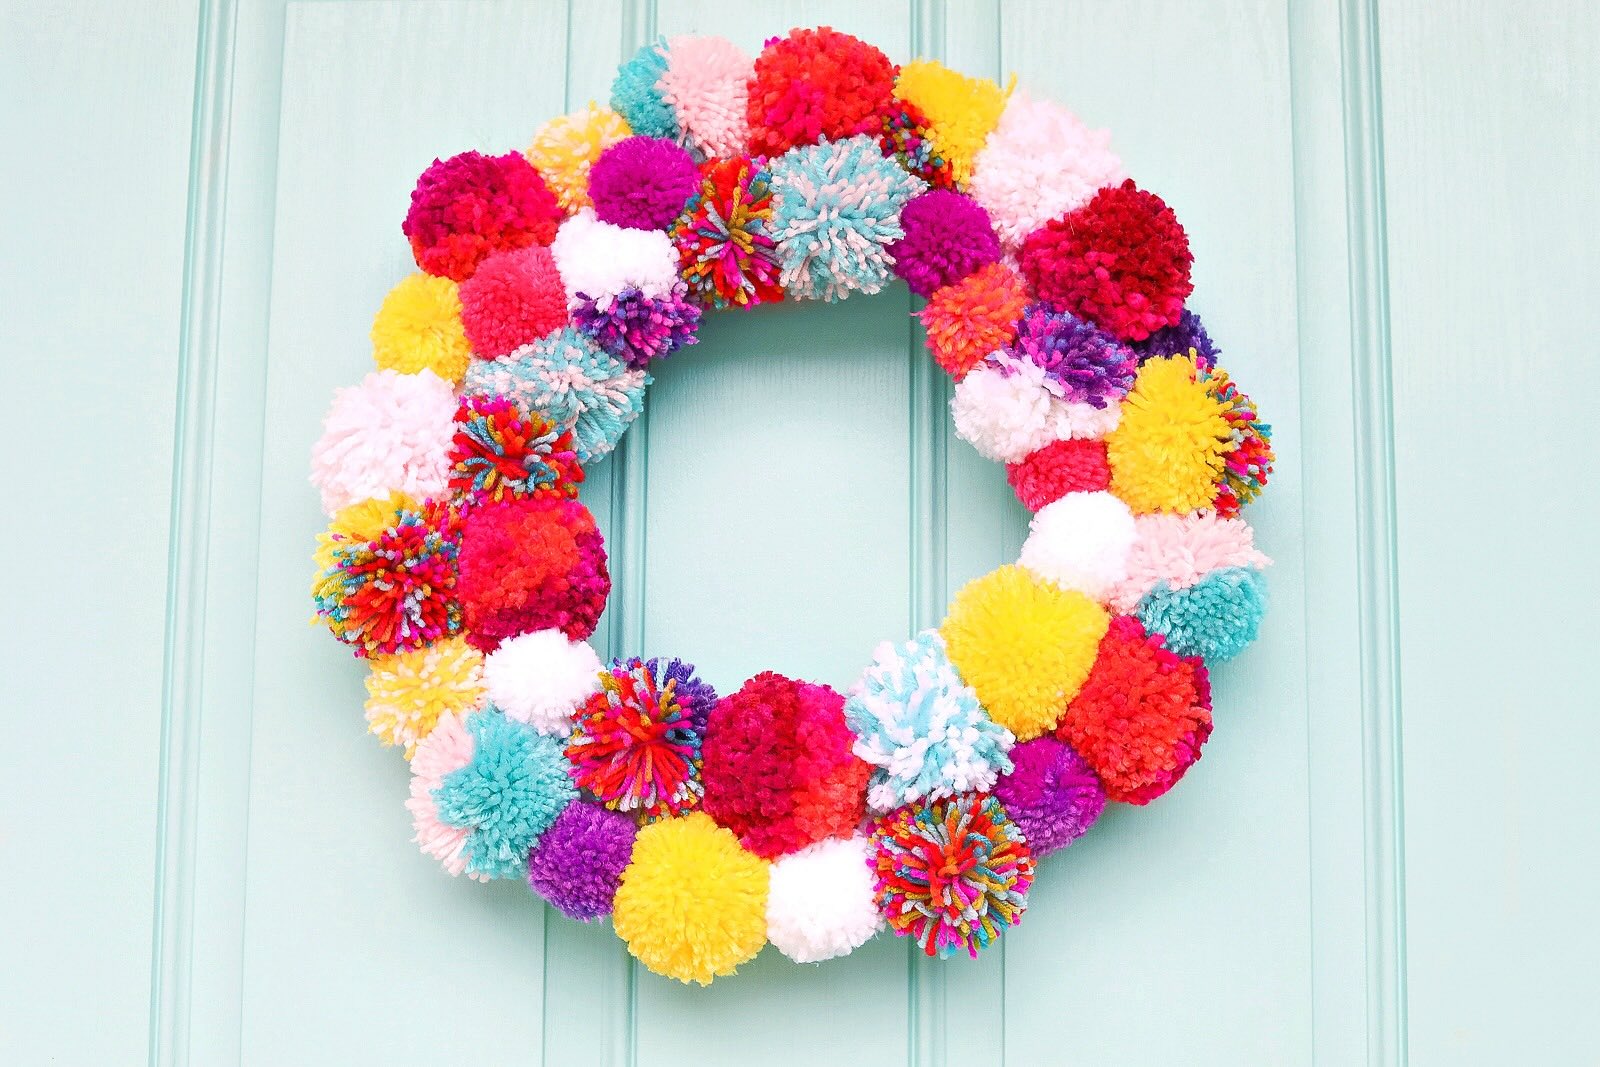 Crafty Home Decor: DIY Pom Pom Wreath For A Festive Touch